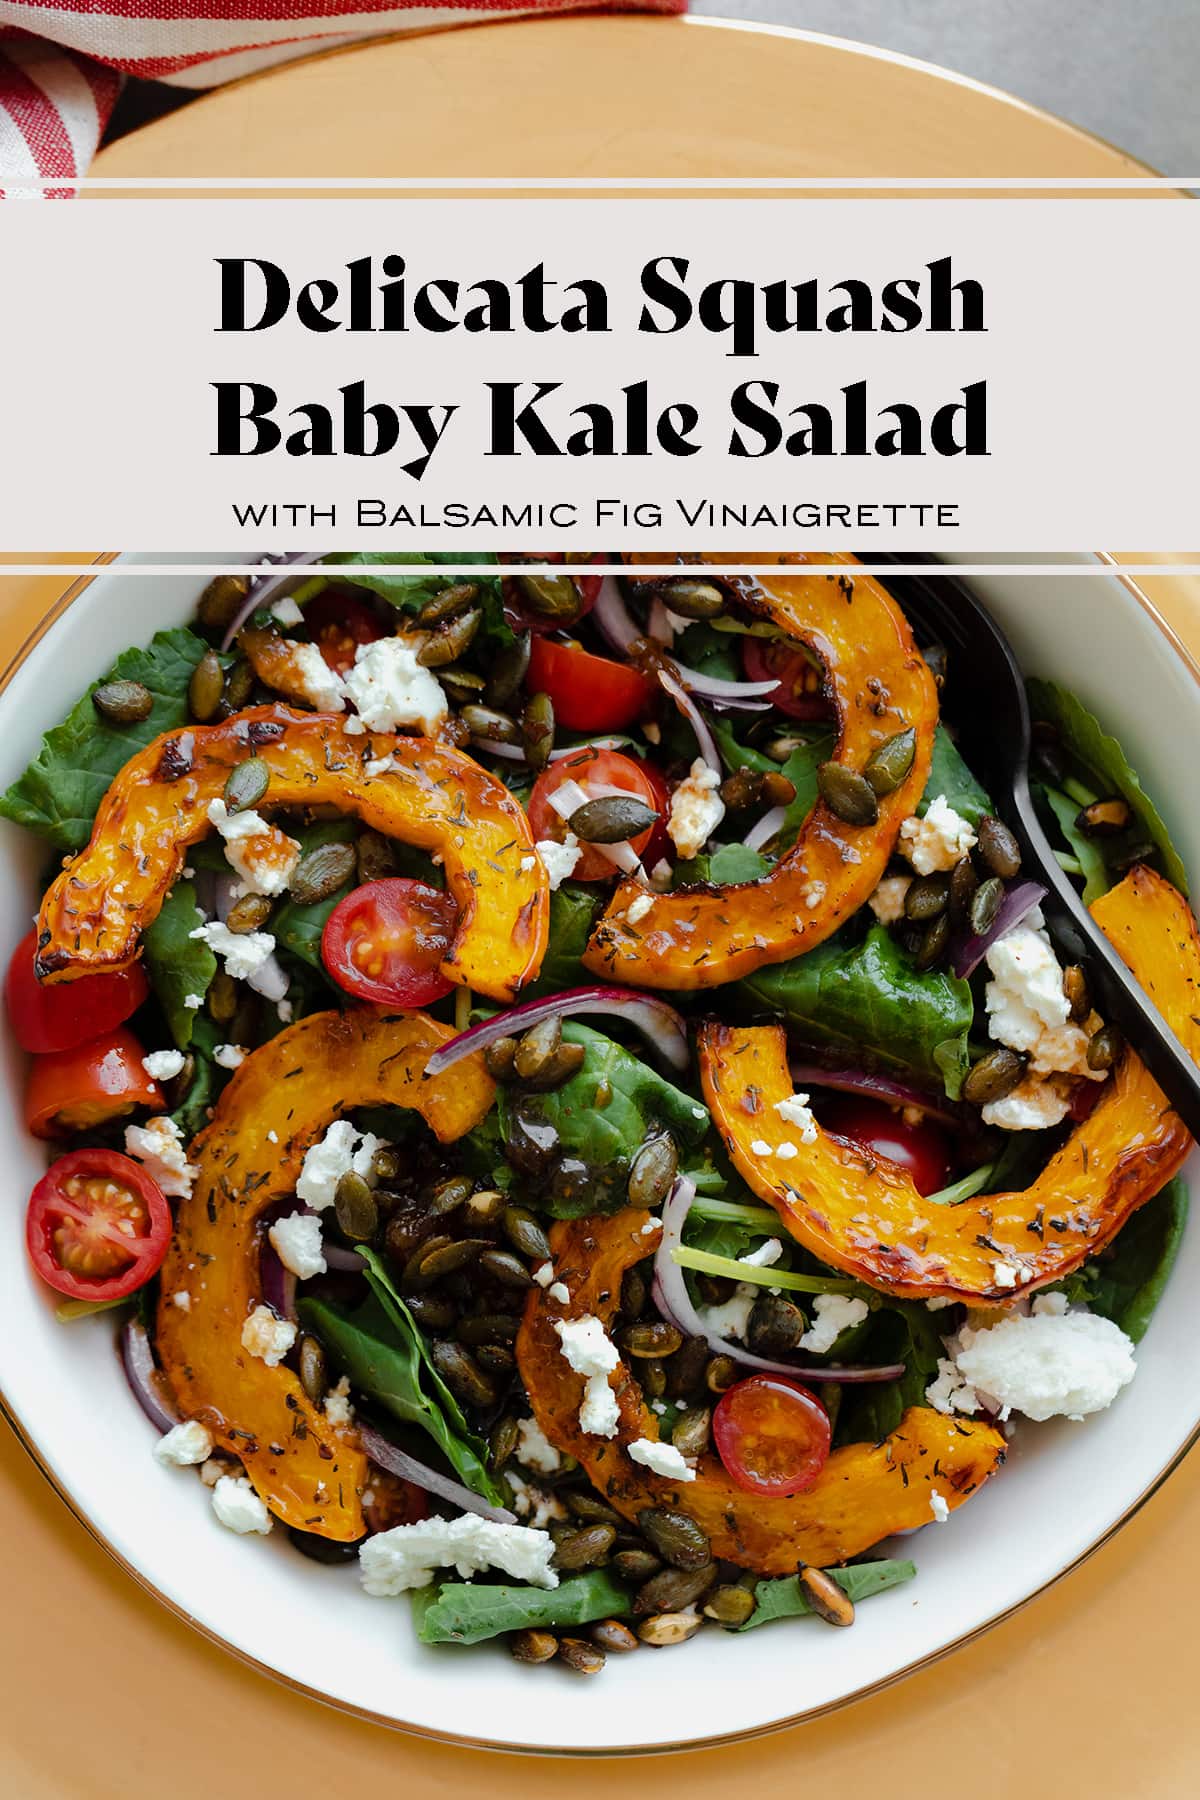 Delicata Squash Baby Kale Salad with Balsamic Fig Vinaigrette